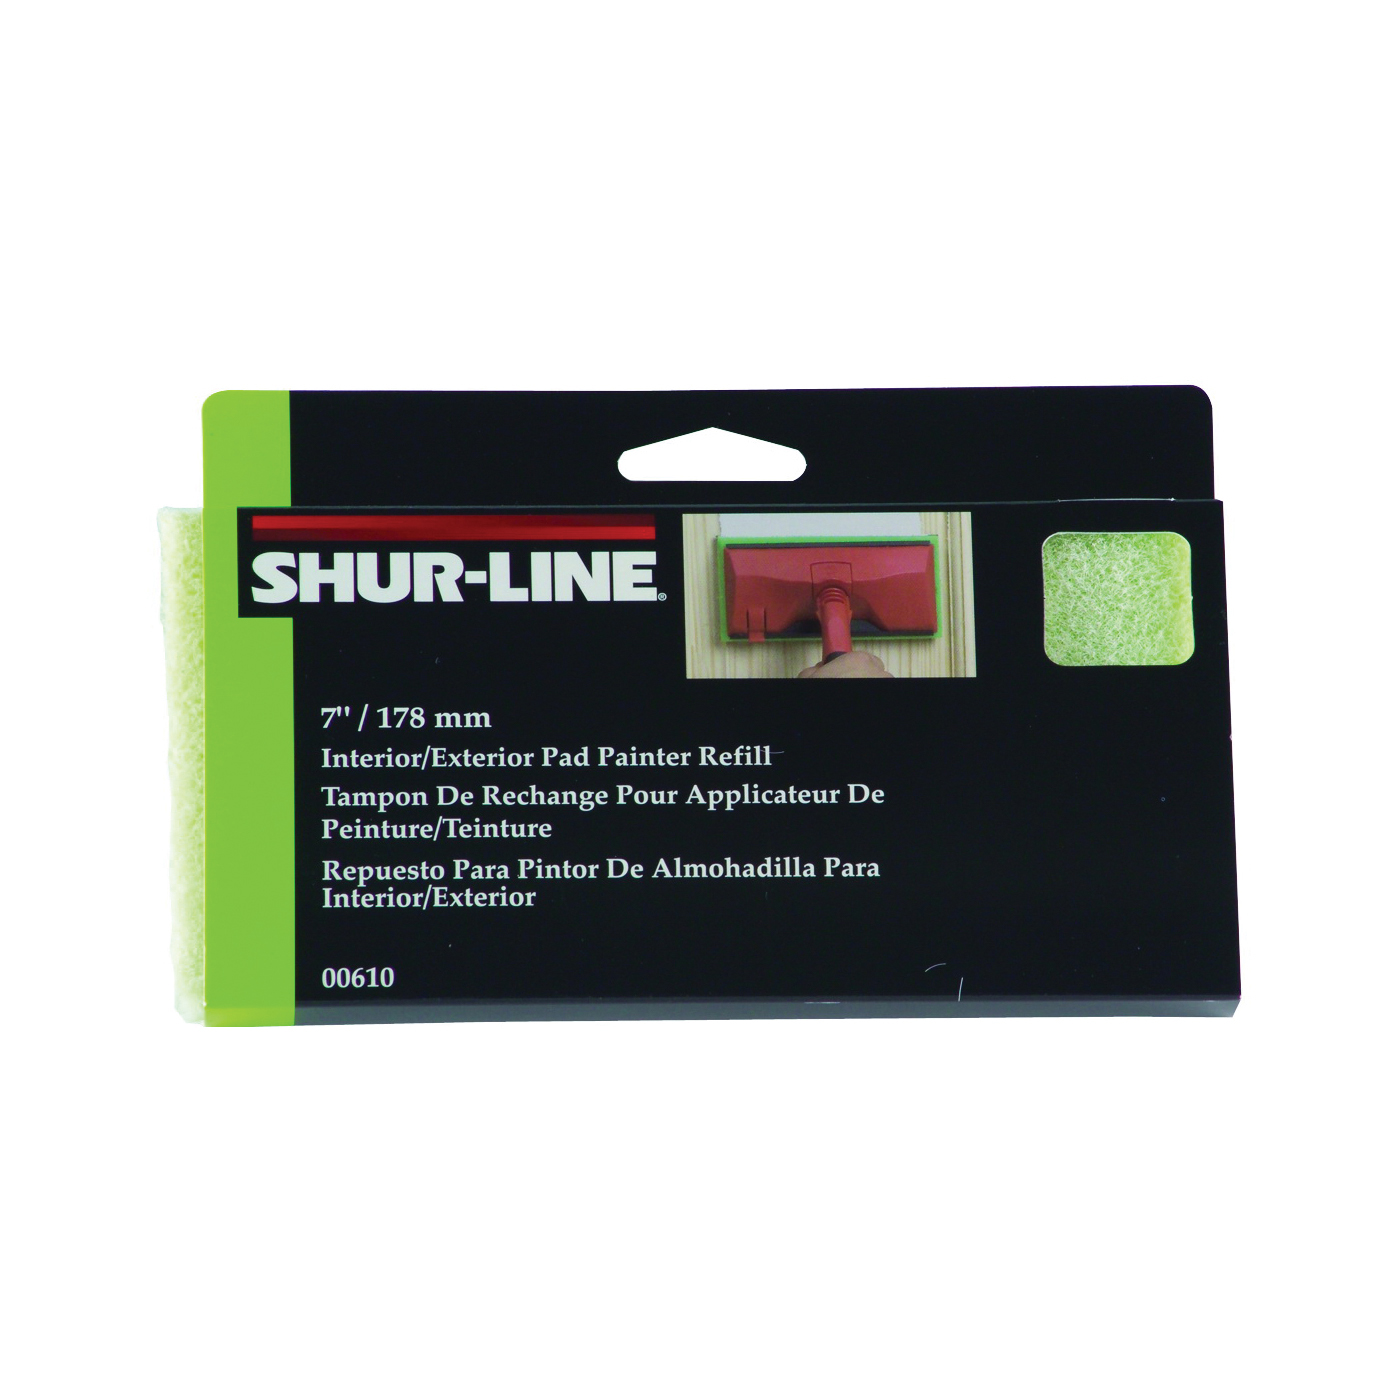 SHUR-LINE 610C Pad Painter Refill, 7 in L Pad, Flocked Foam Pad - 1